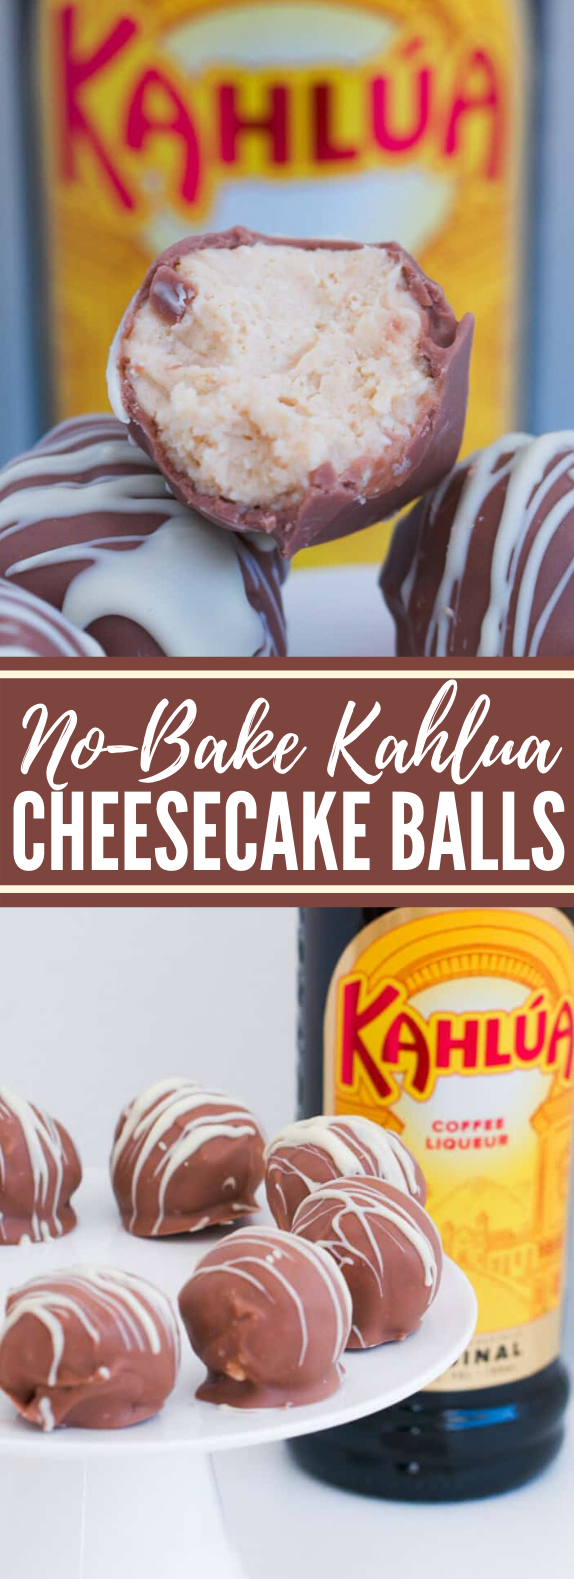 Kahlua Cheesecake Balls #desserts #chocolate